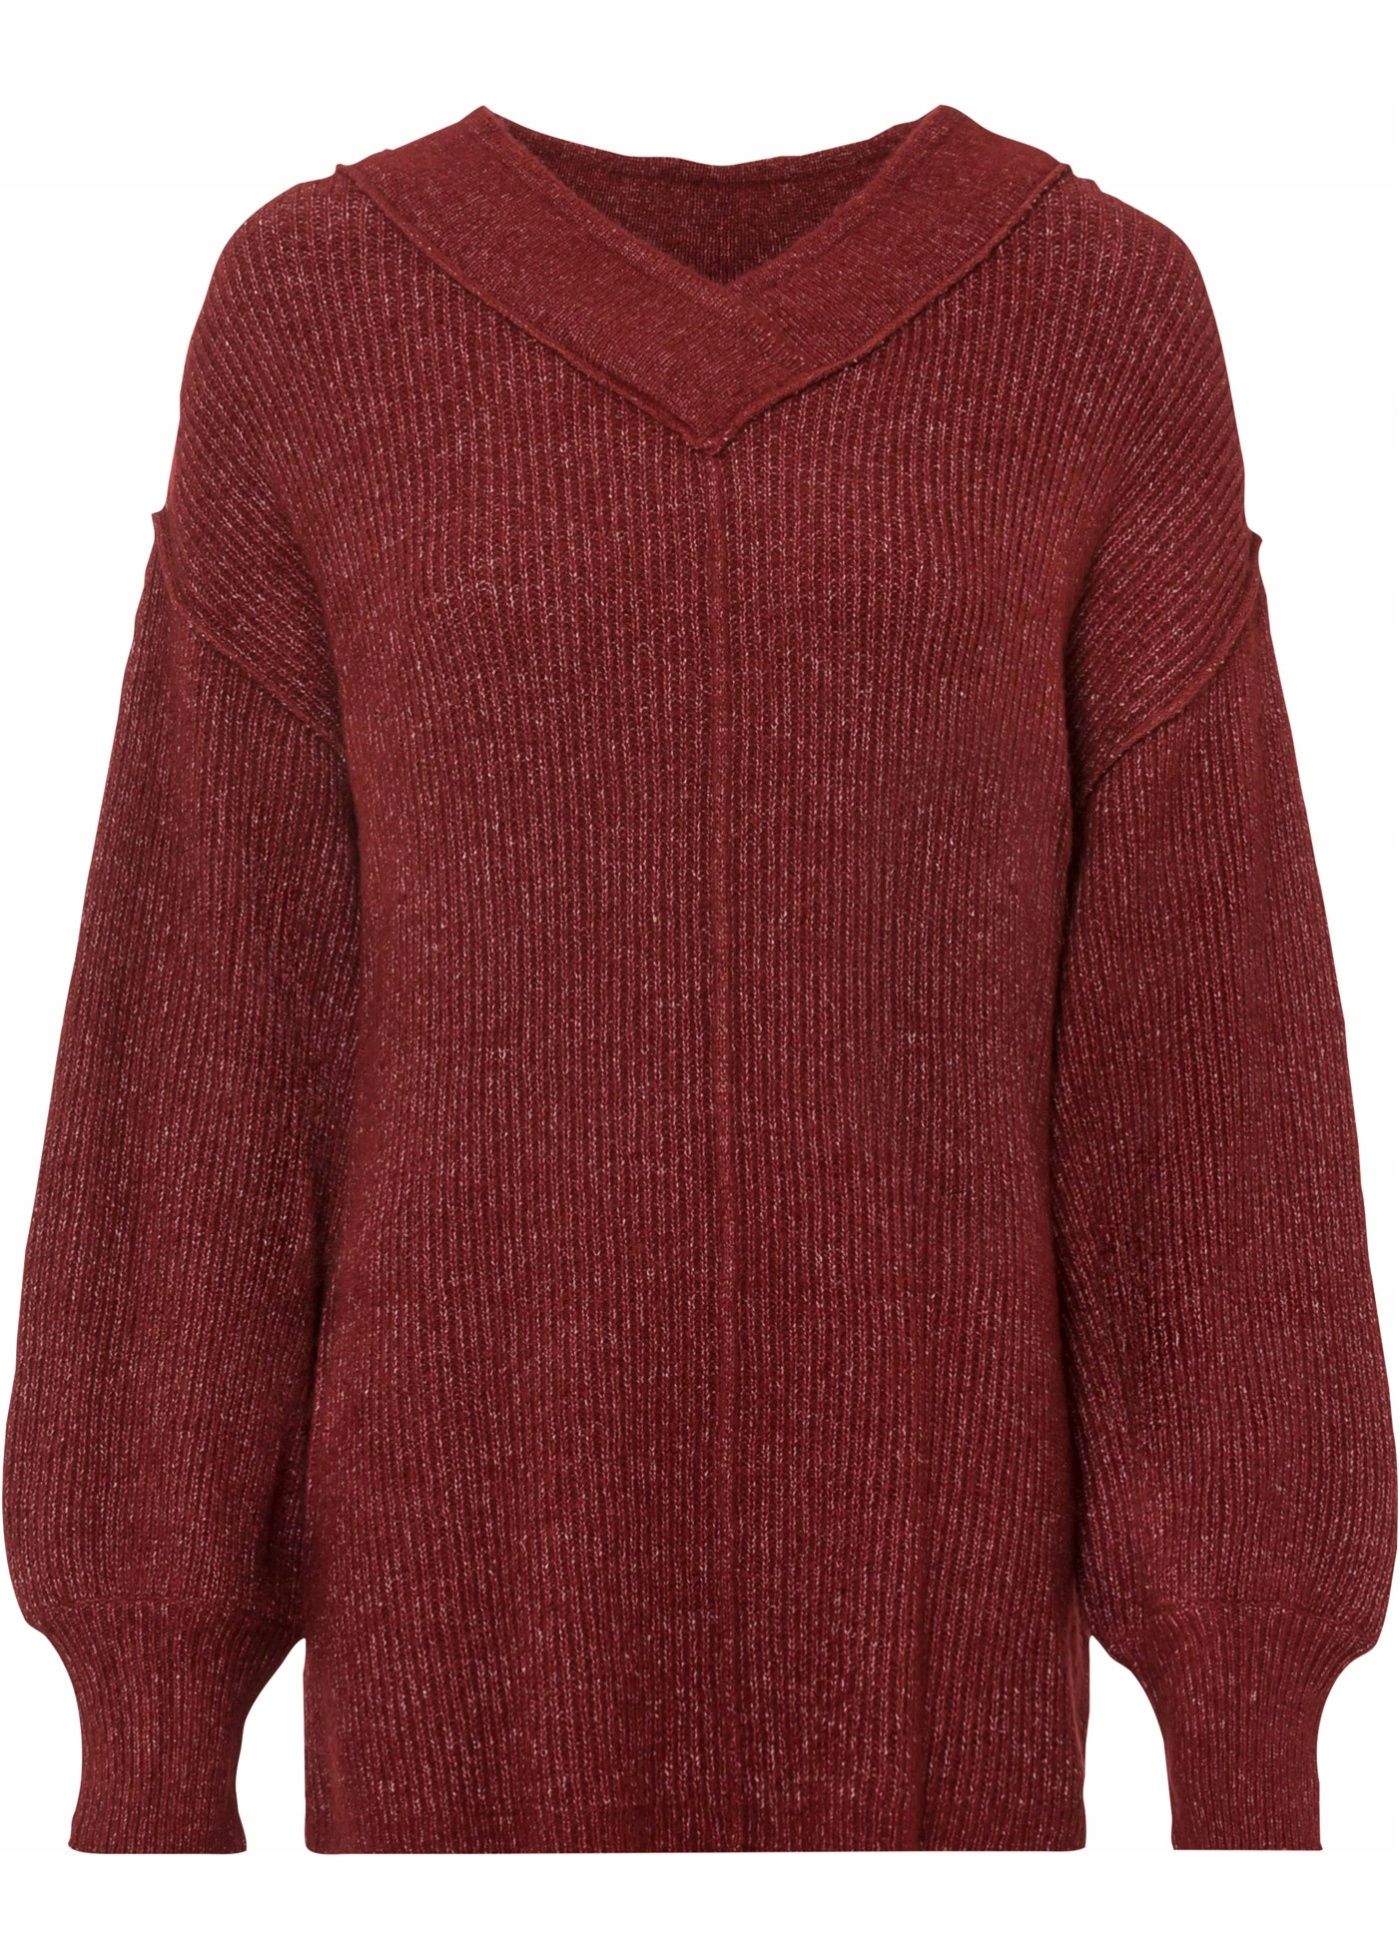 B.P.C bordowy sweter damski modny r.40/42